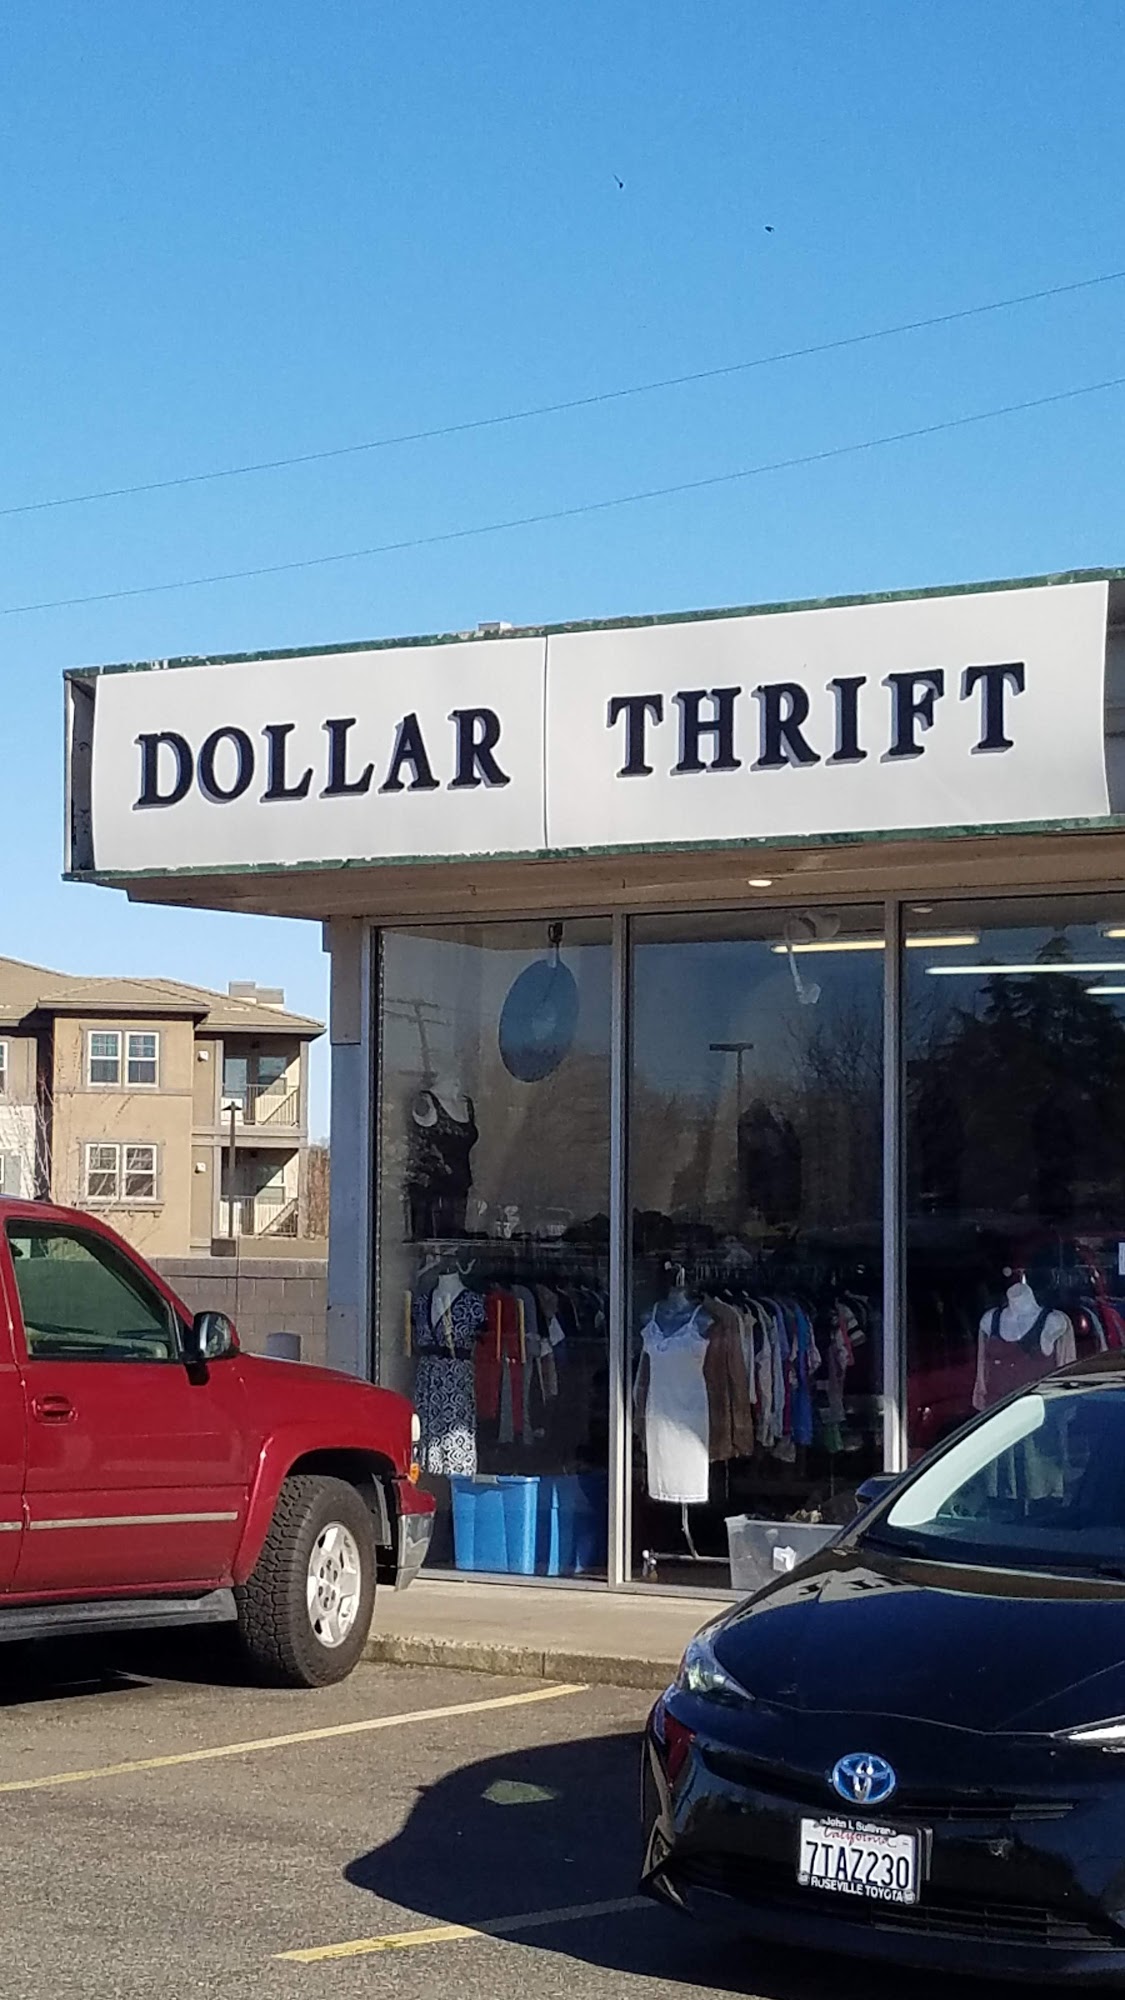 Dollar Thrift